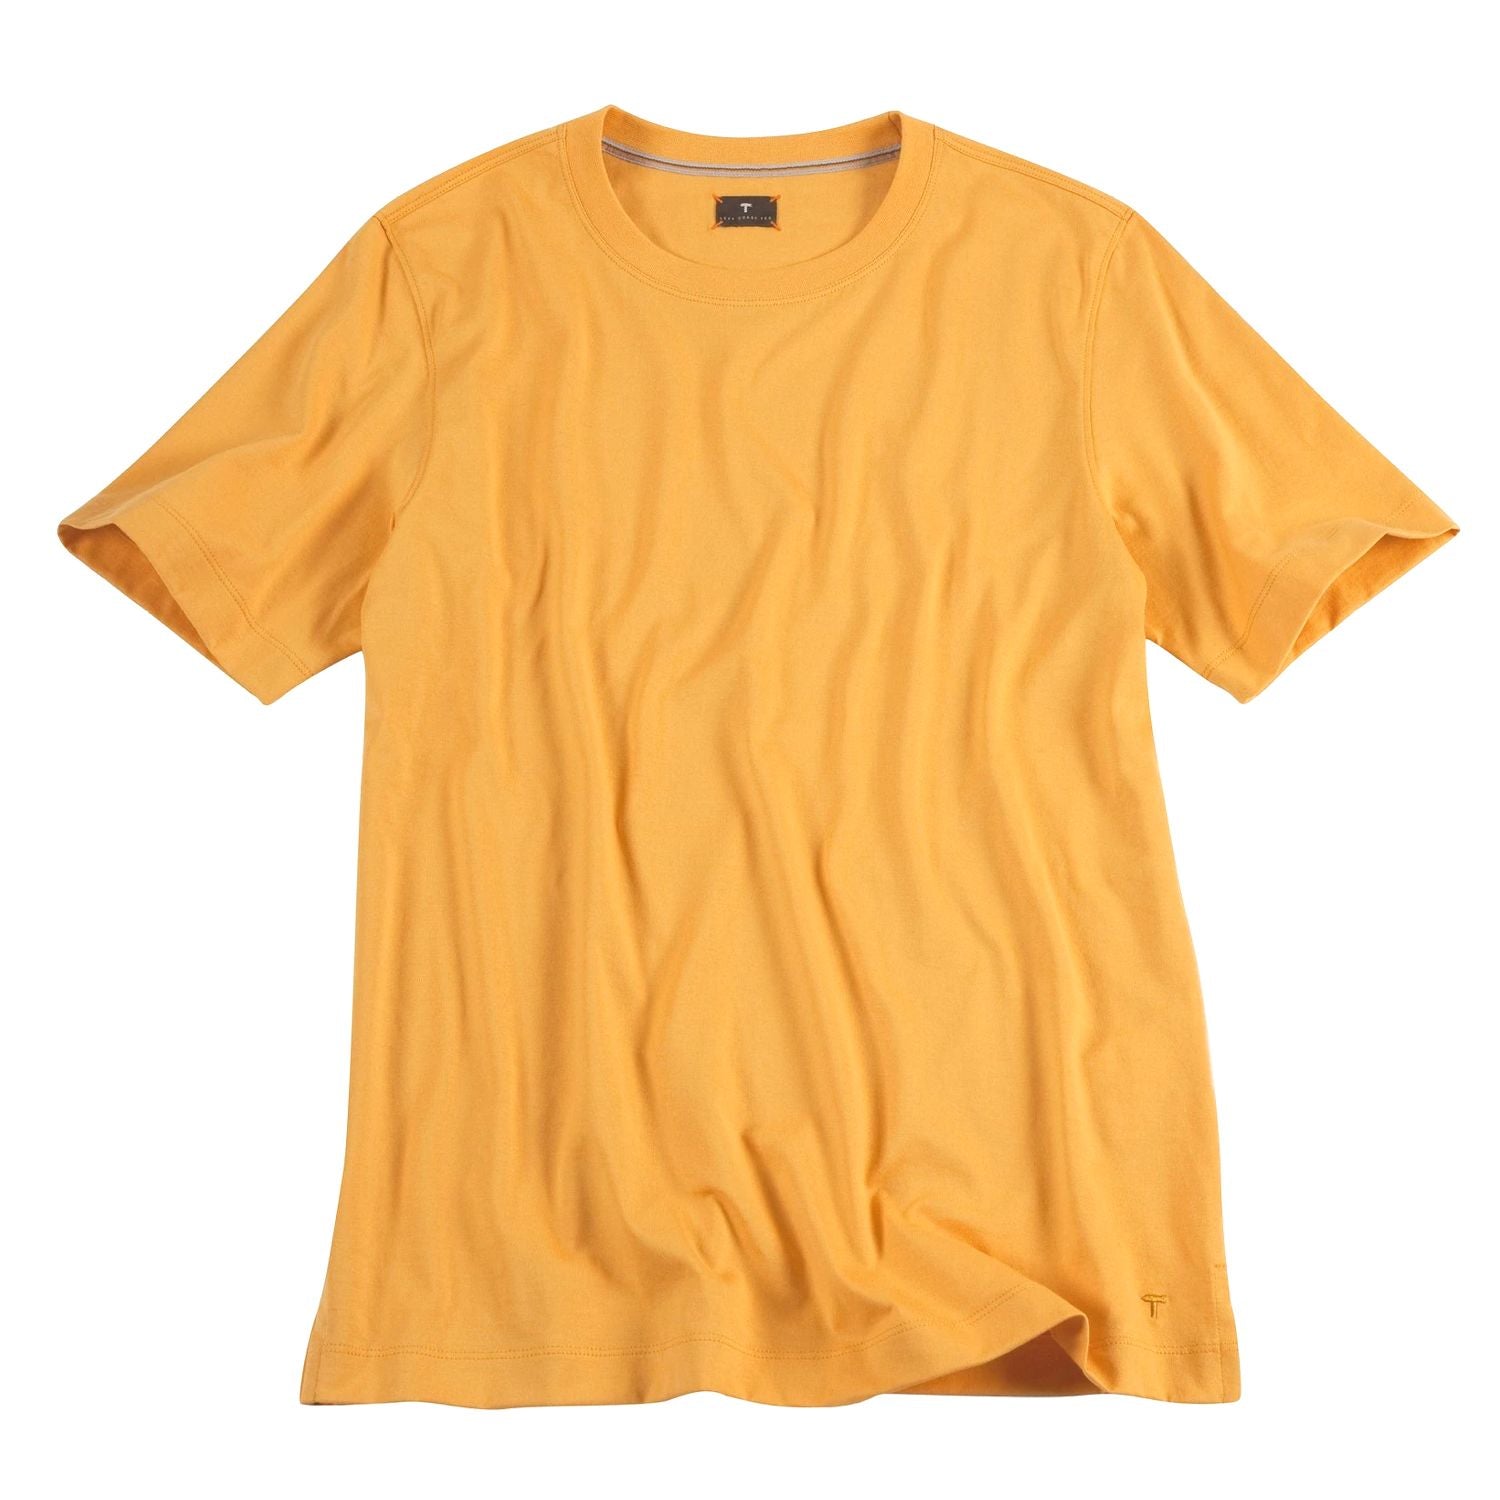 Crew Neck Peruvian Cotton Tee Shirt in Orange (Size Large) by Left Coast Tee